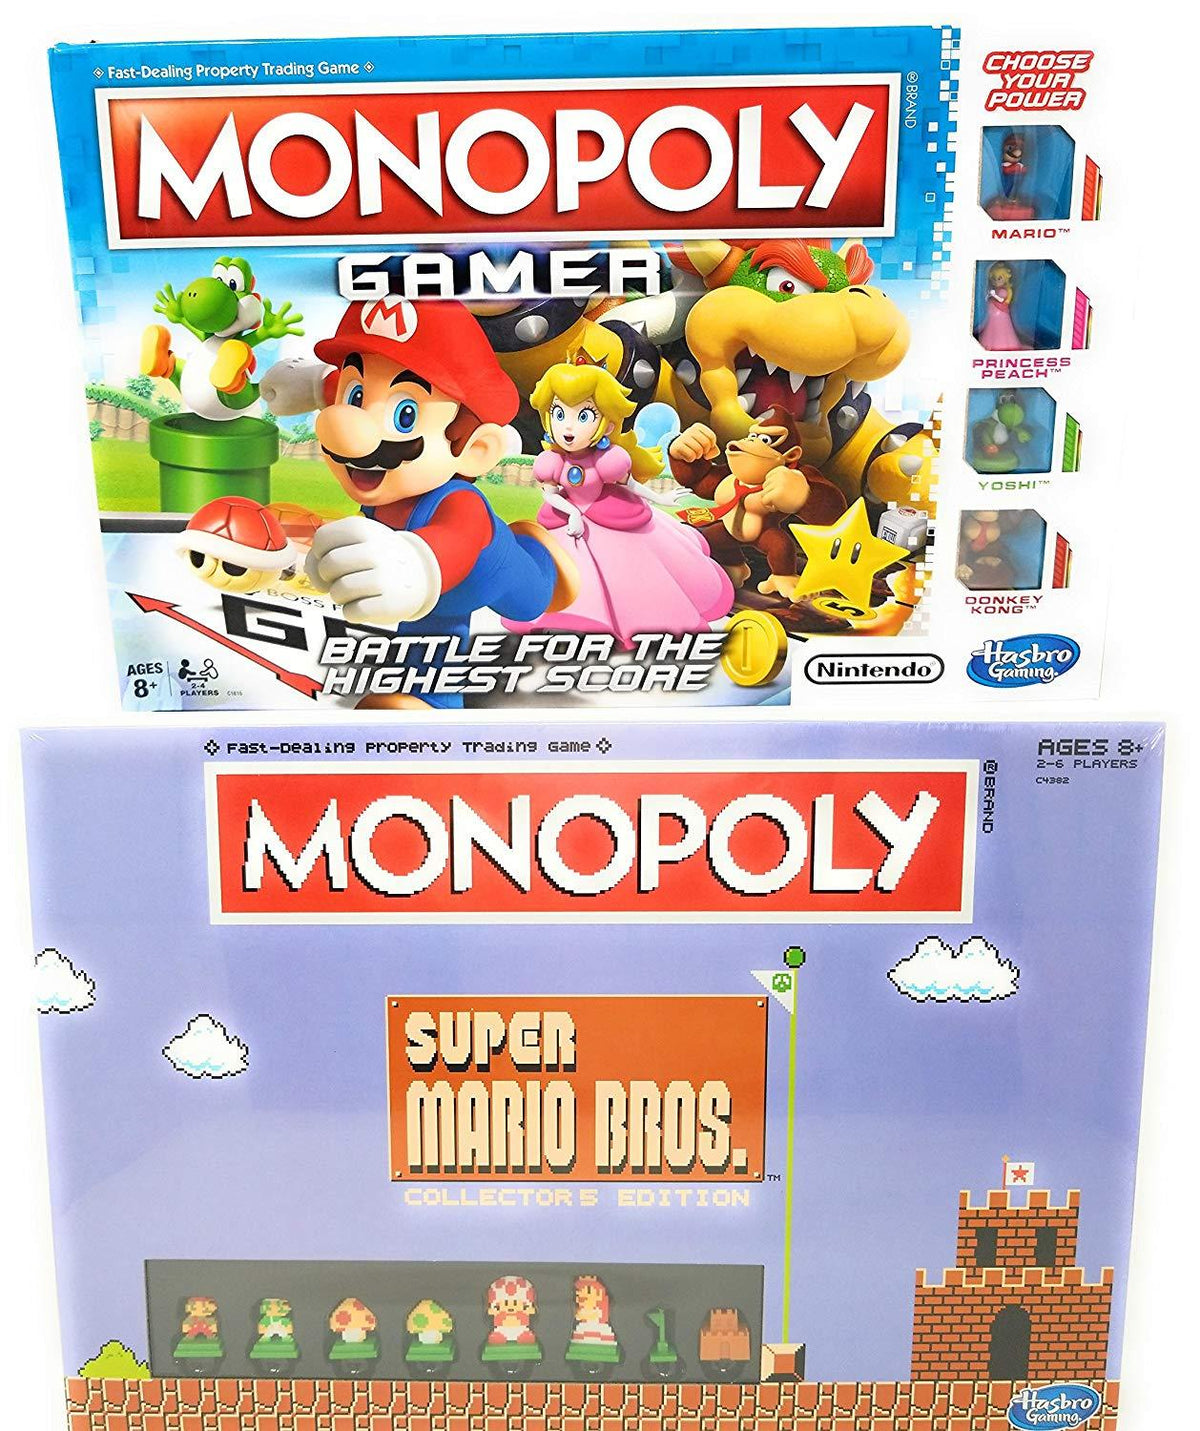 Monopoly Gamer and Super Mario Bros Monopoly Game Bundle